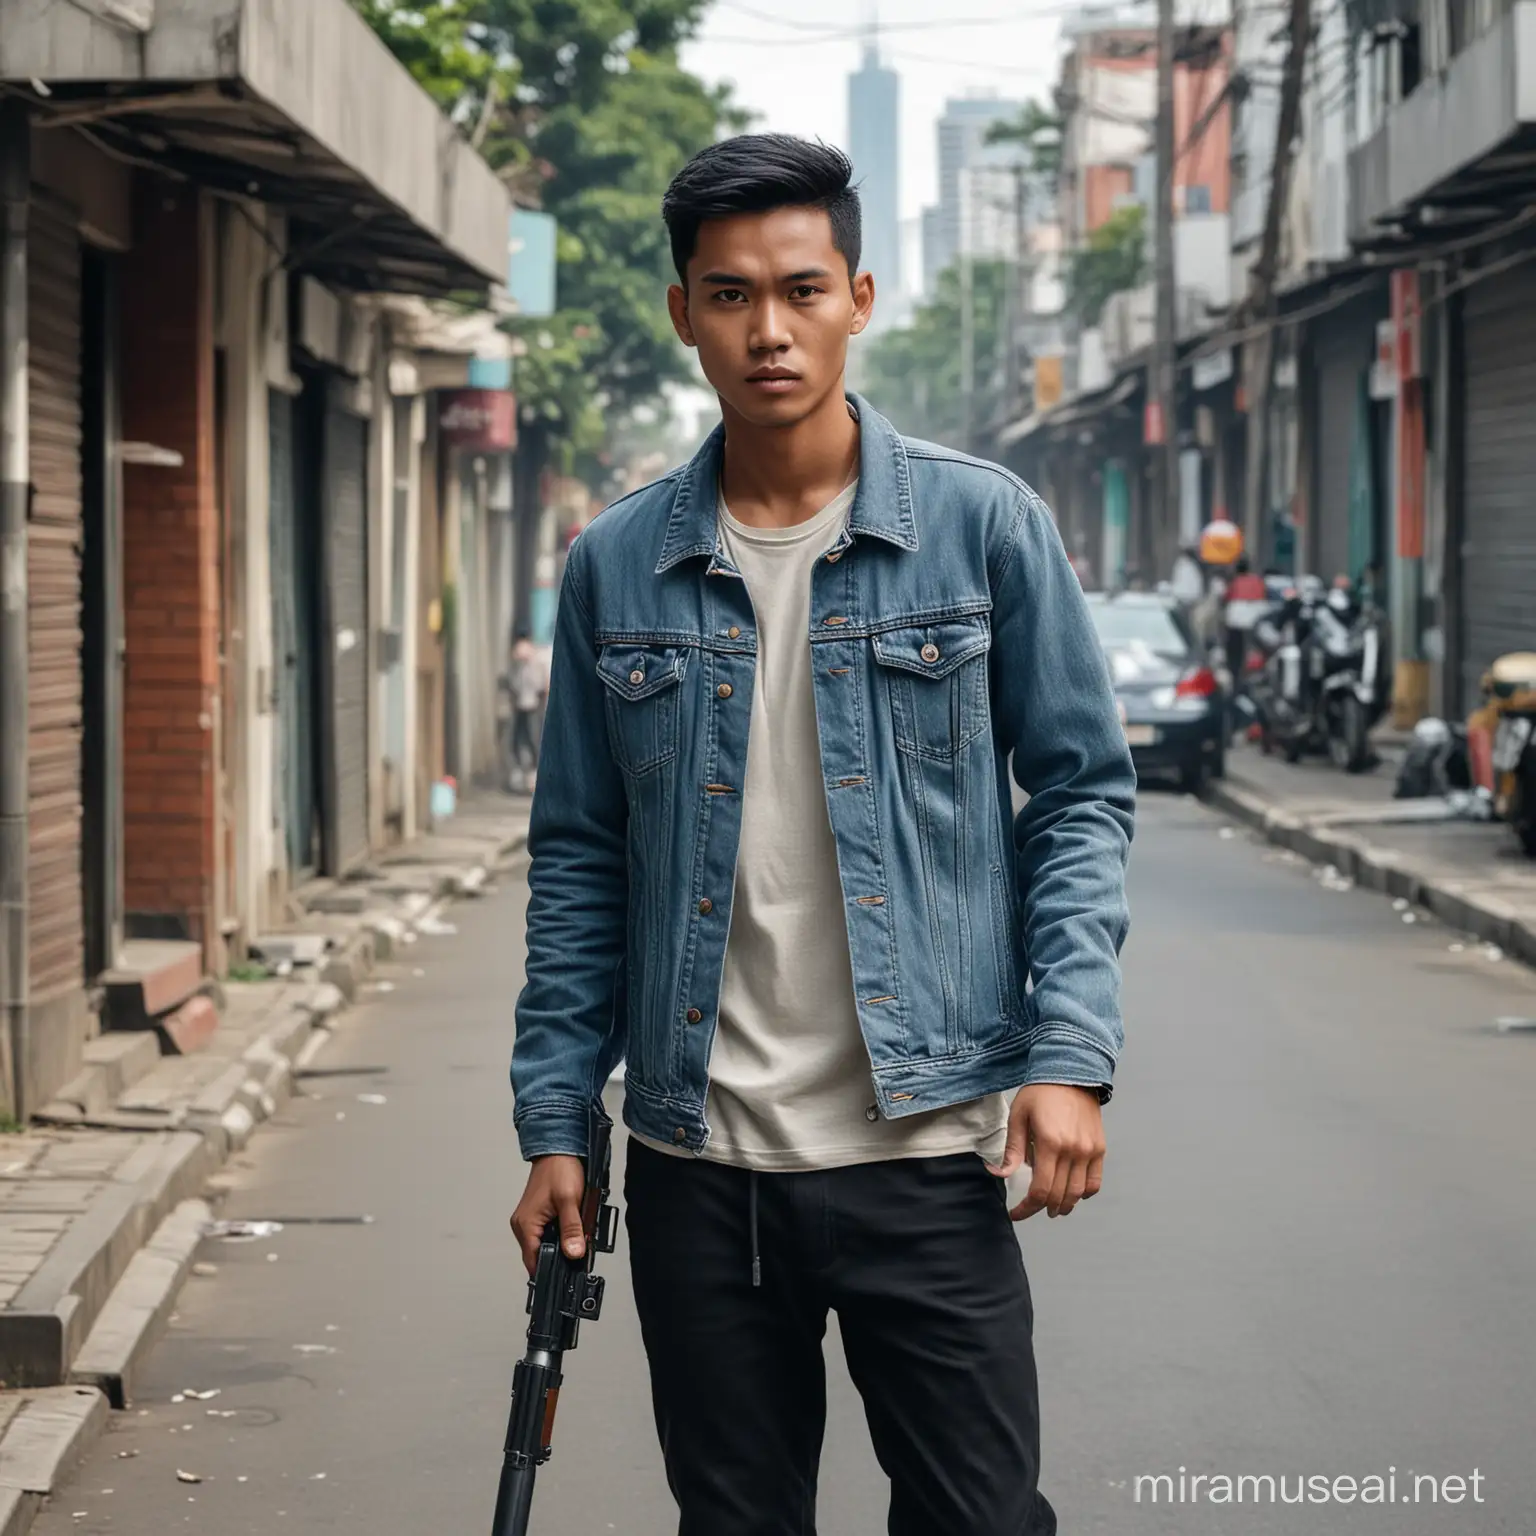 Stylish Indonesian Man with AK Rifle in Urban Setting